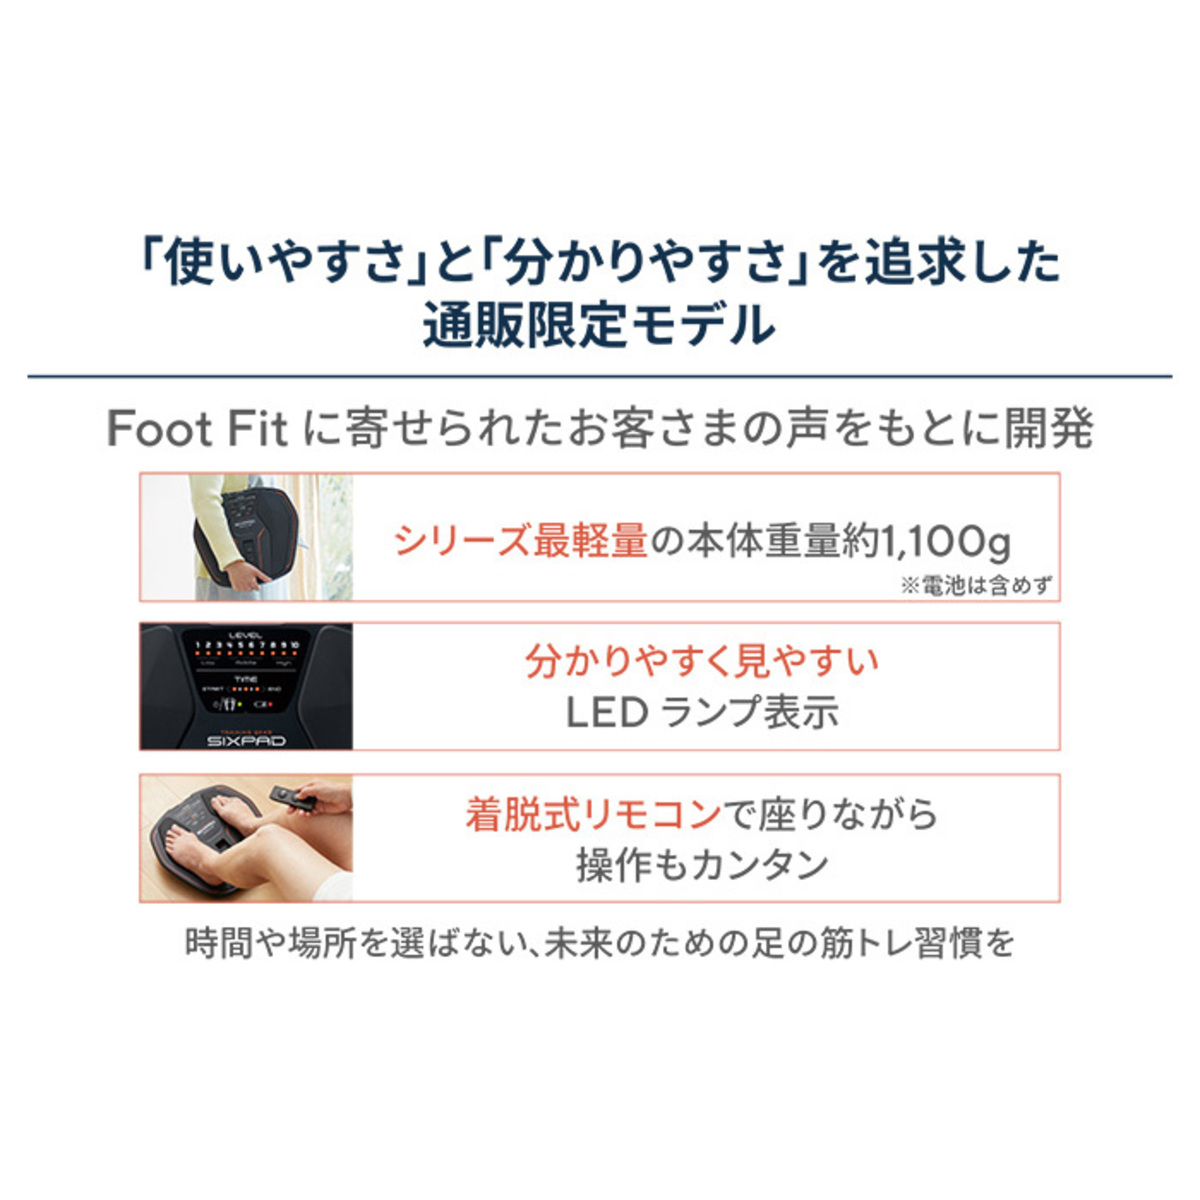 SIXPAD Foot Fit Lite [フットフィットライト シックスパッドSIXPAD